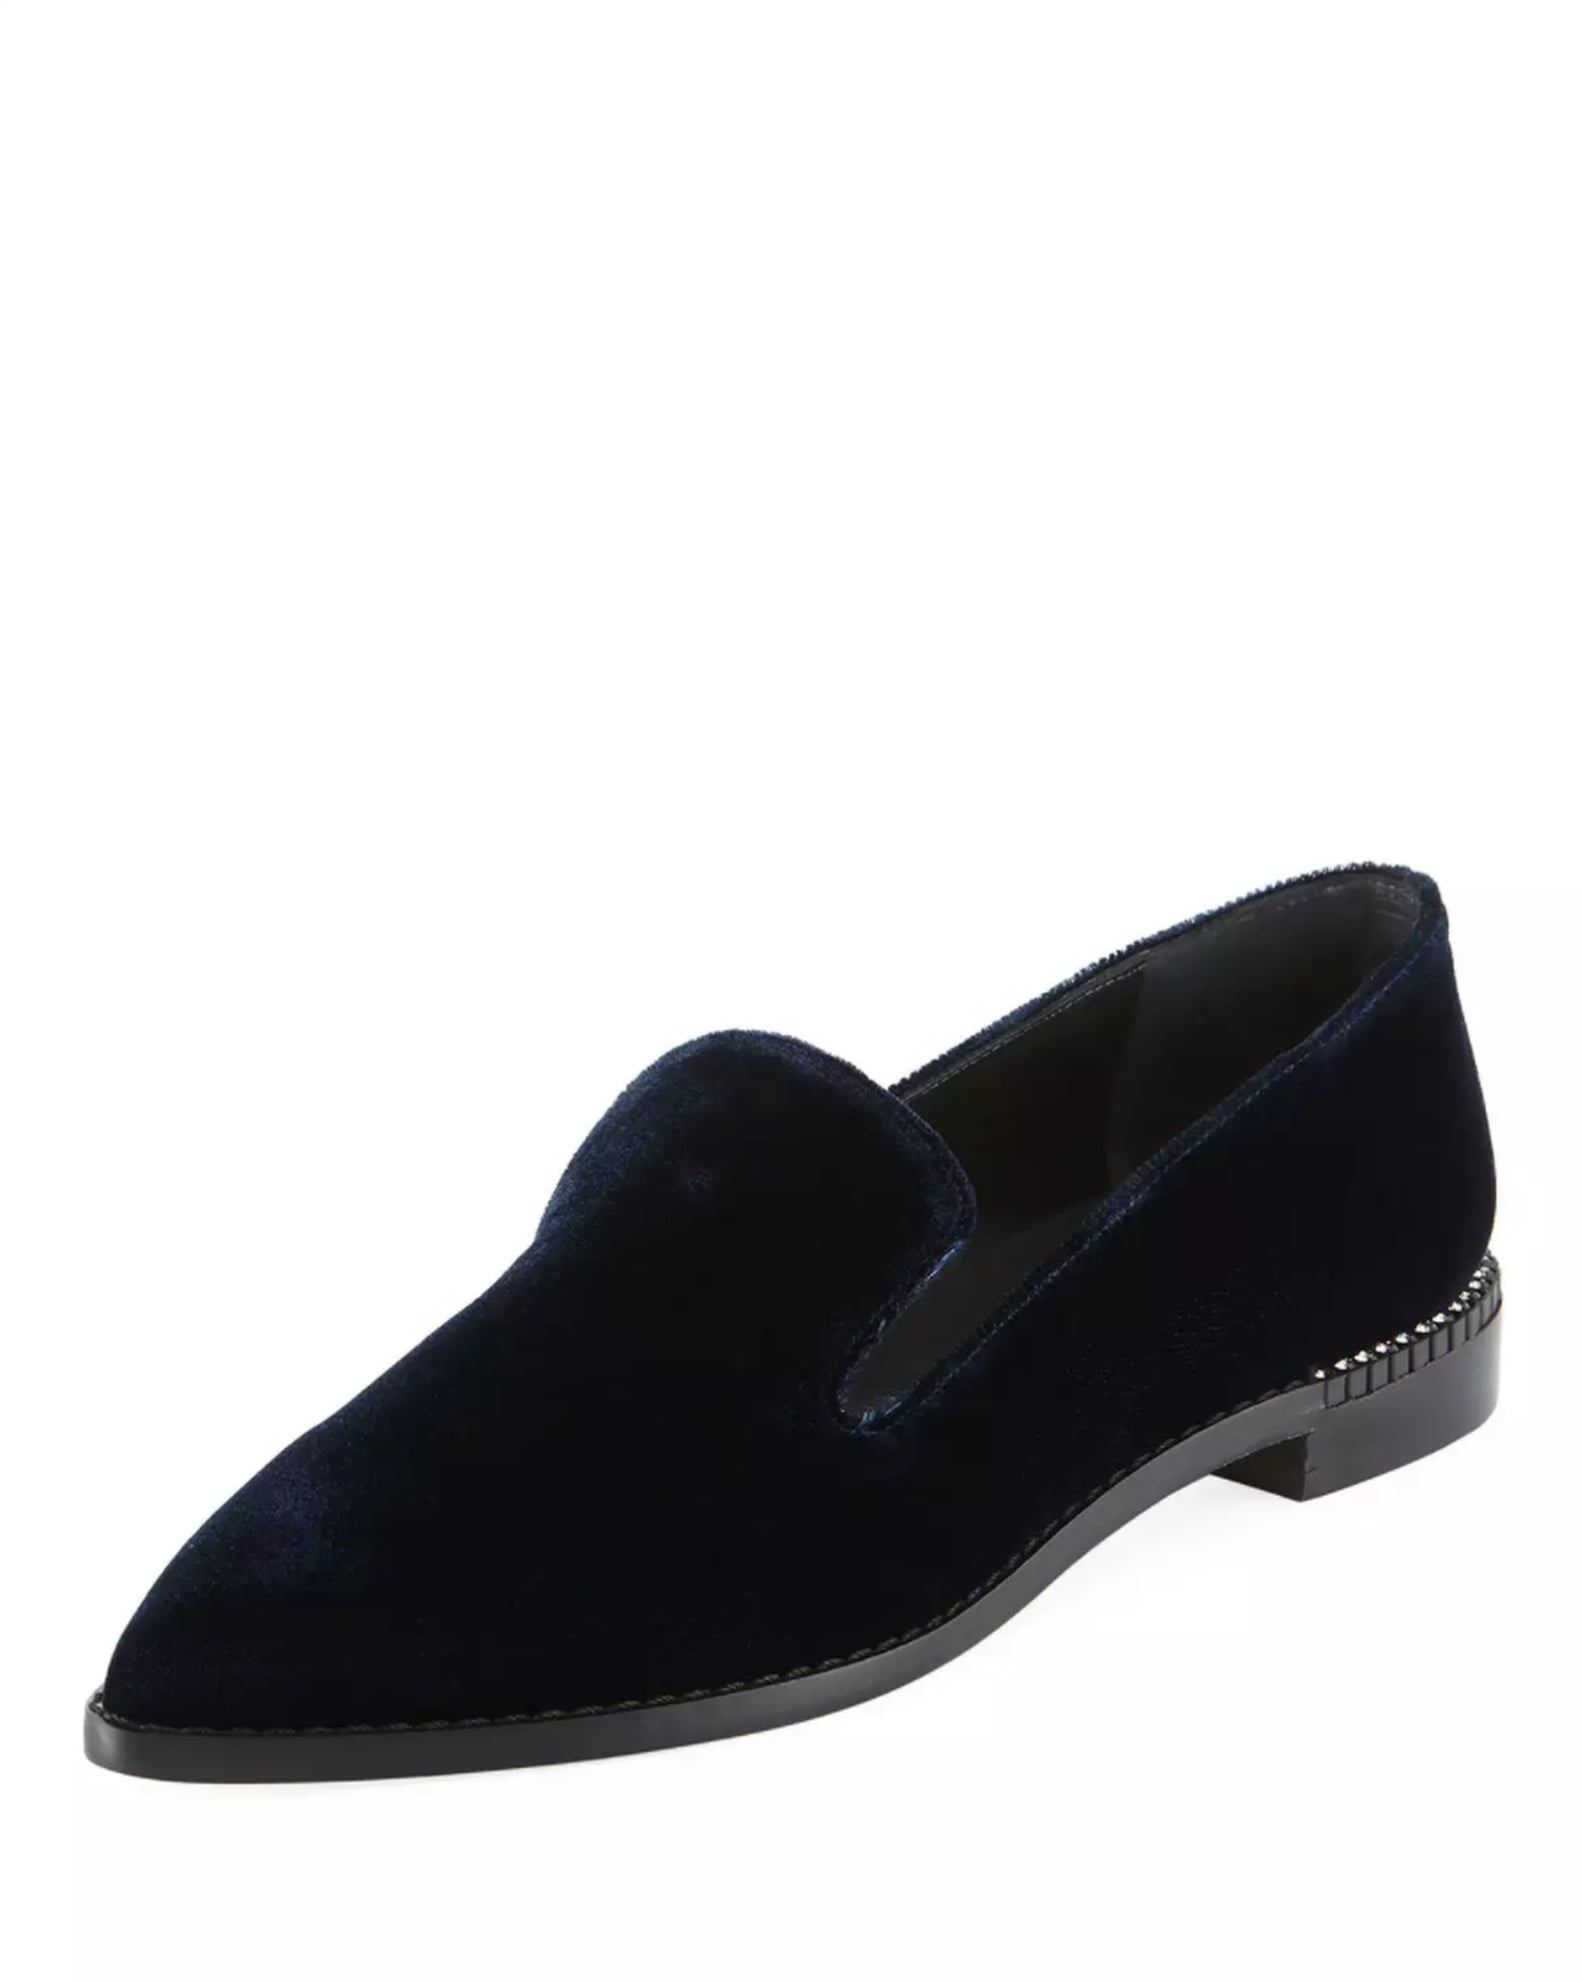 Prince William Wearing Velvet Loafers | POPSUGAR Fashion